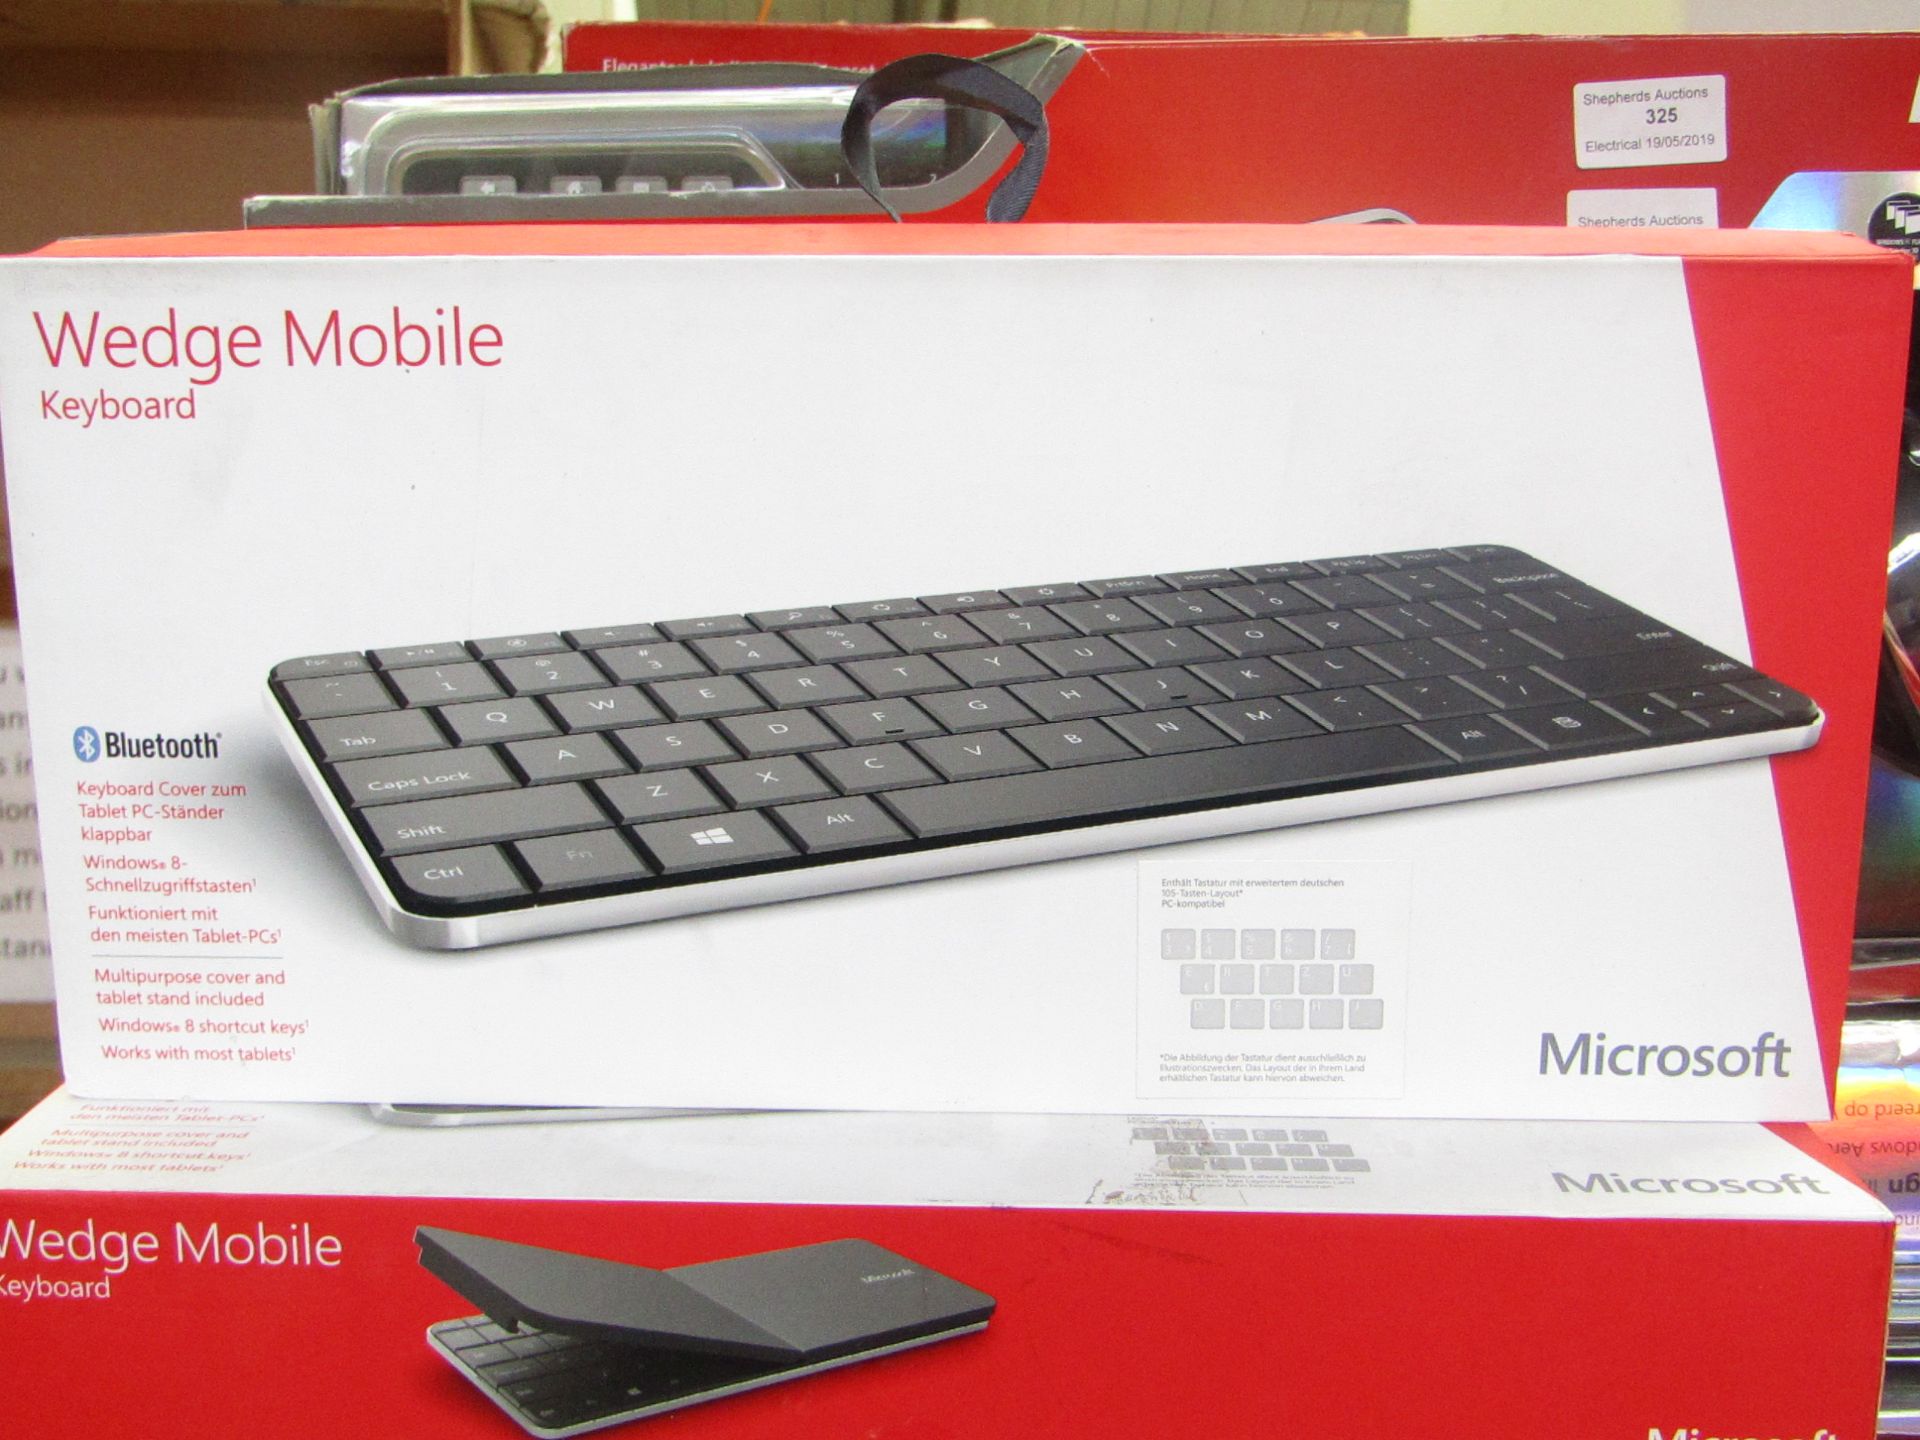 Microsoft wedge mobile keyboard, unused and boxed.